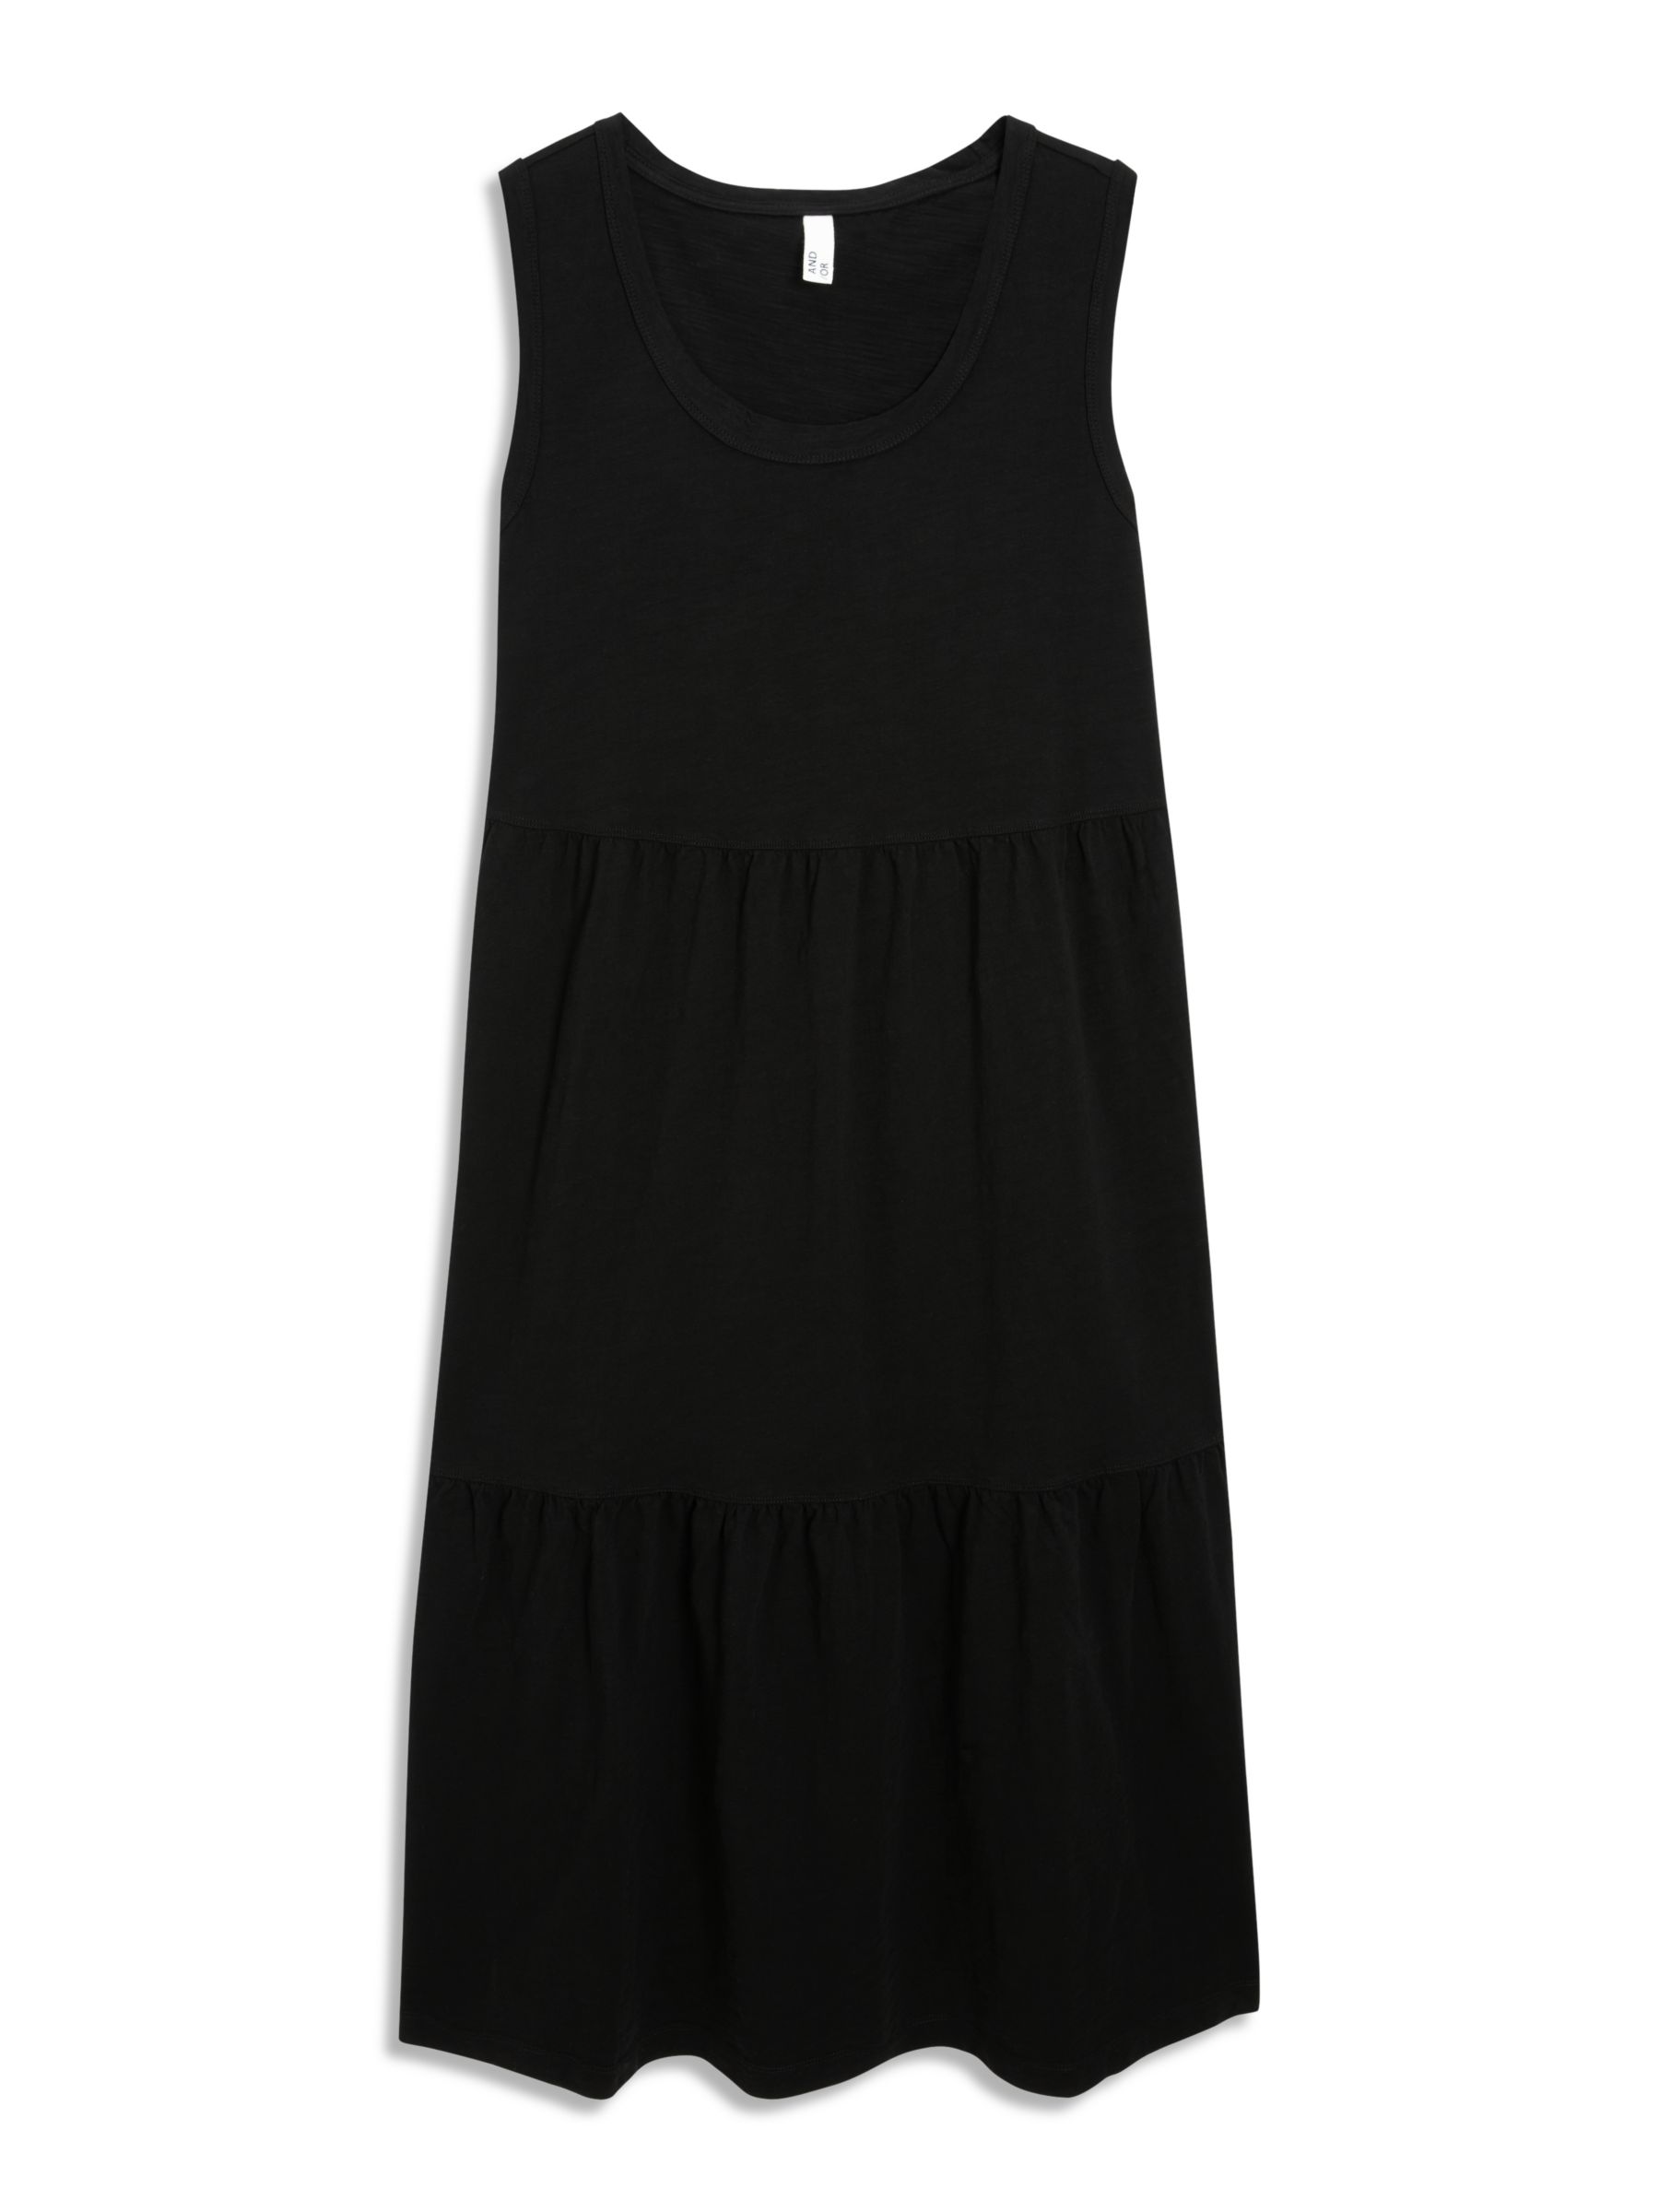 AND/OR Bernie Sleeveless Jersey Dress, Black, 6